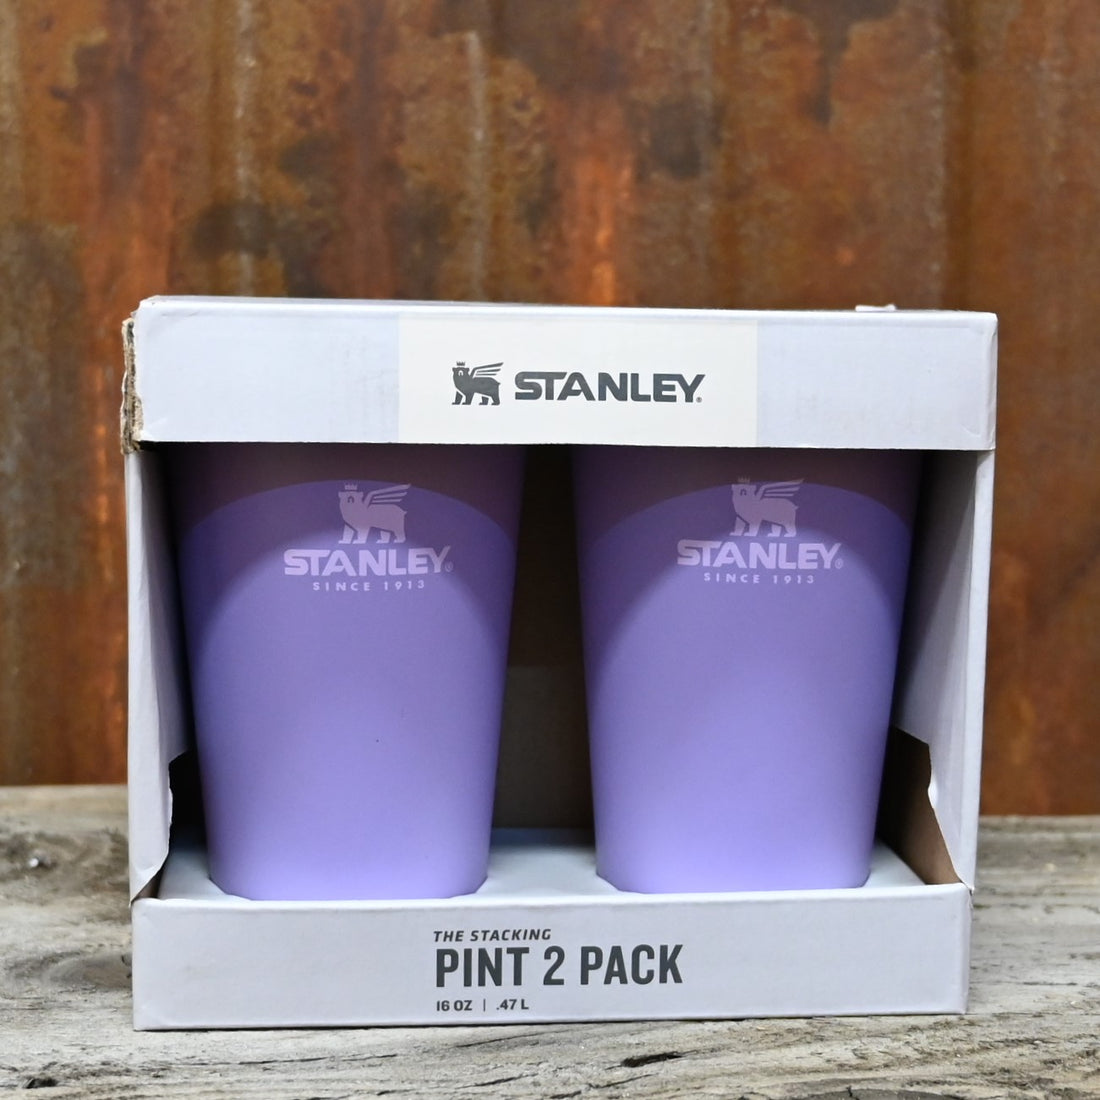 Stanley Adventure Stacking Beer Pint in Lavender (2 pack) view of pints